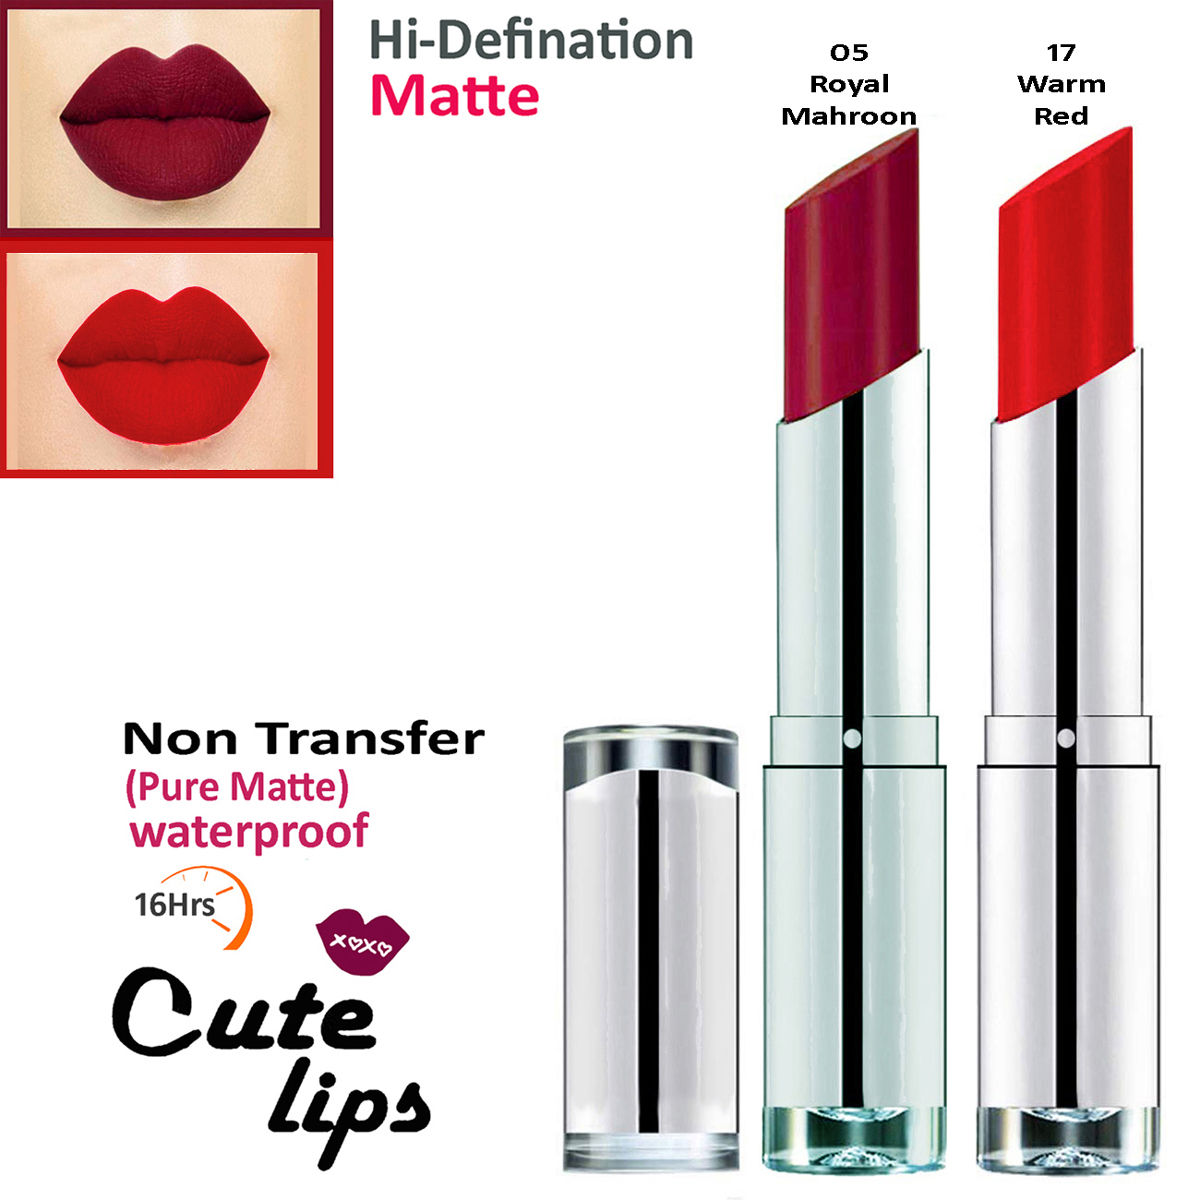 bq BLAQUE Cute Lips Non Transfer Matte Lipstick 2.4 gm each - 05 ...